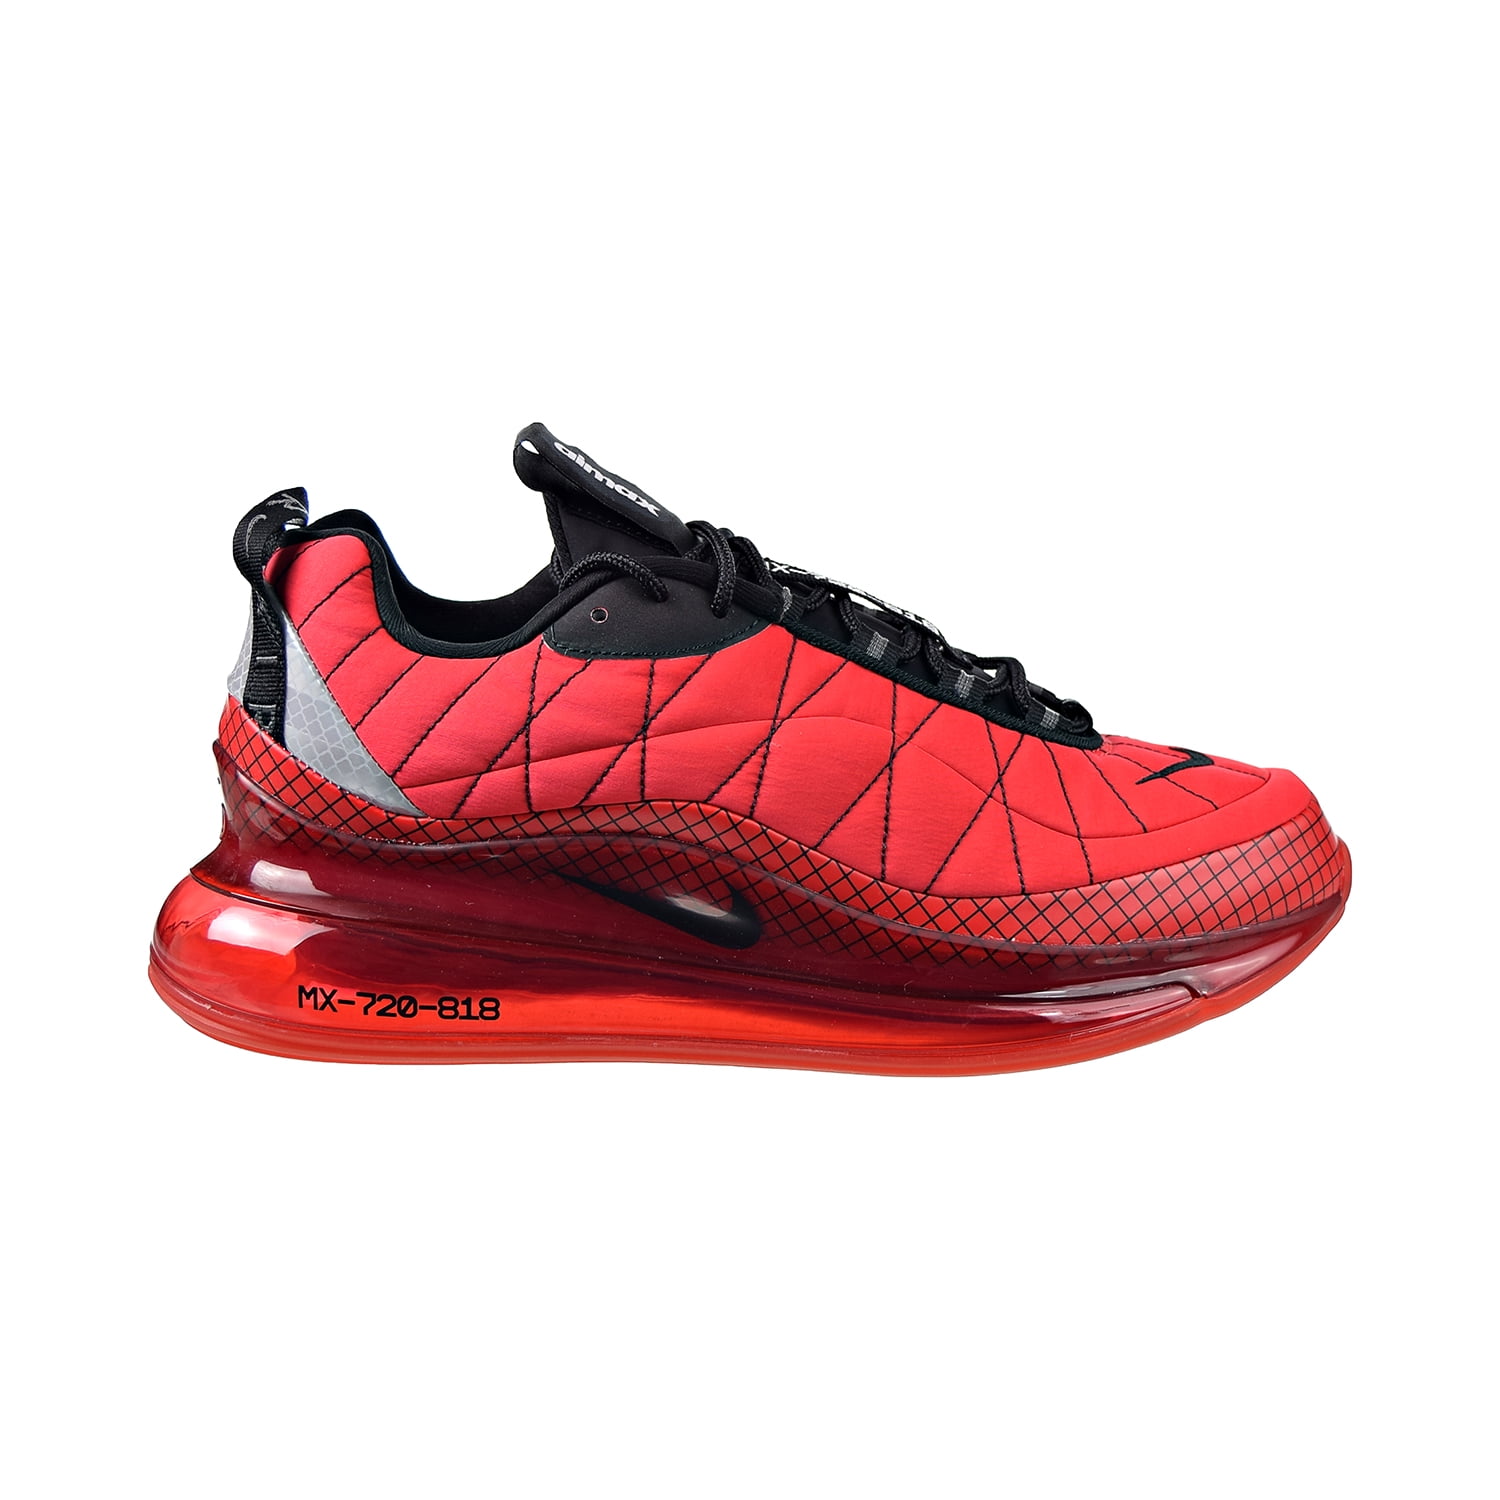 NEW Nike Air Max 720 MX-720-818 Shoes CI3871-001 Black Men's Size 6